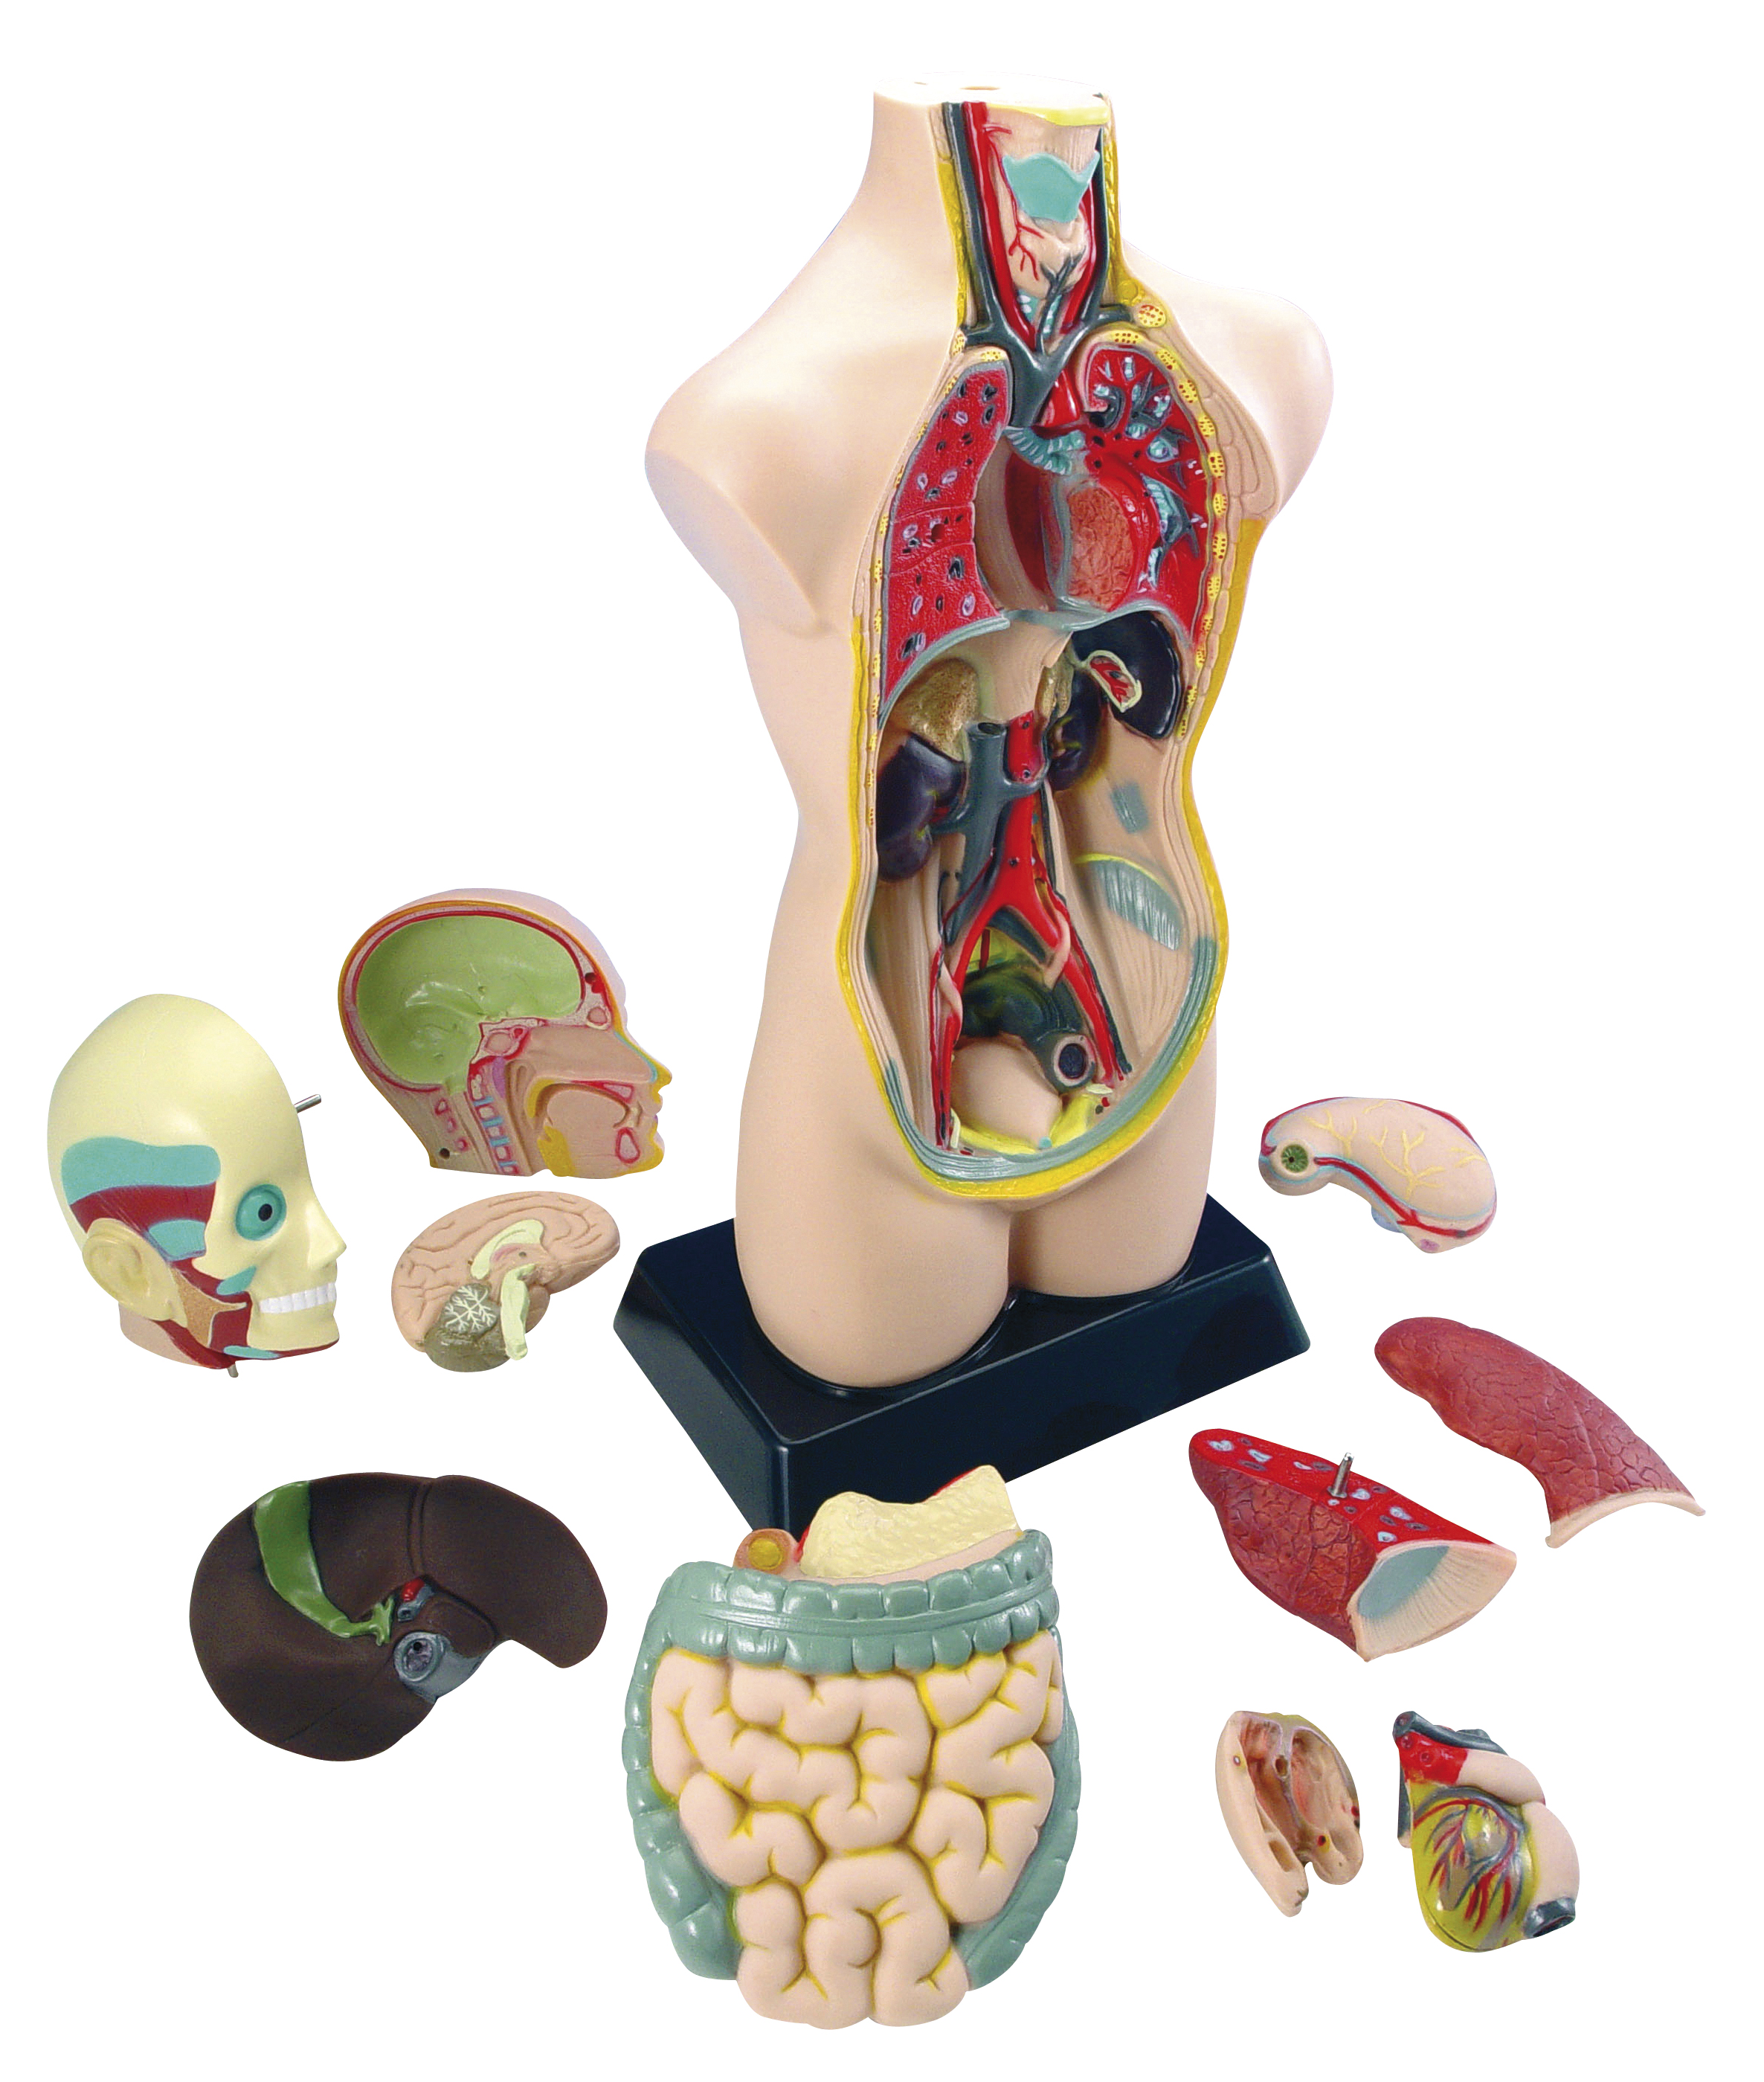 Torso Anatomie Modell groß ca. 50cm hoch 11 naturgetreue Teile